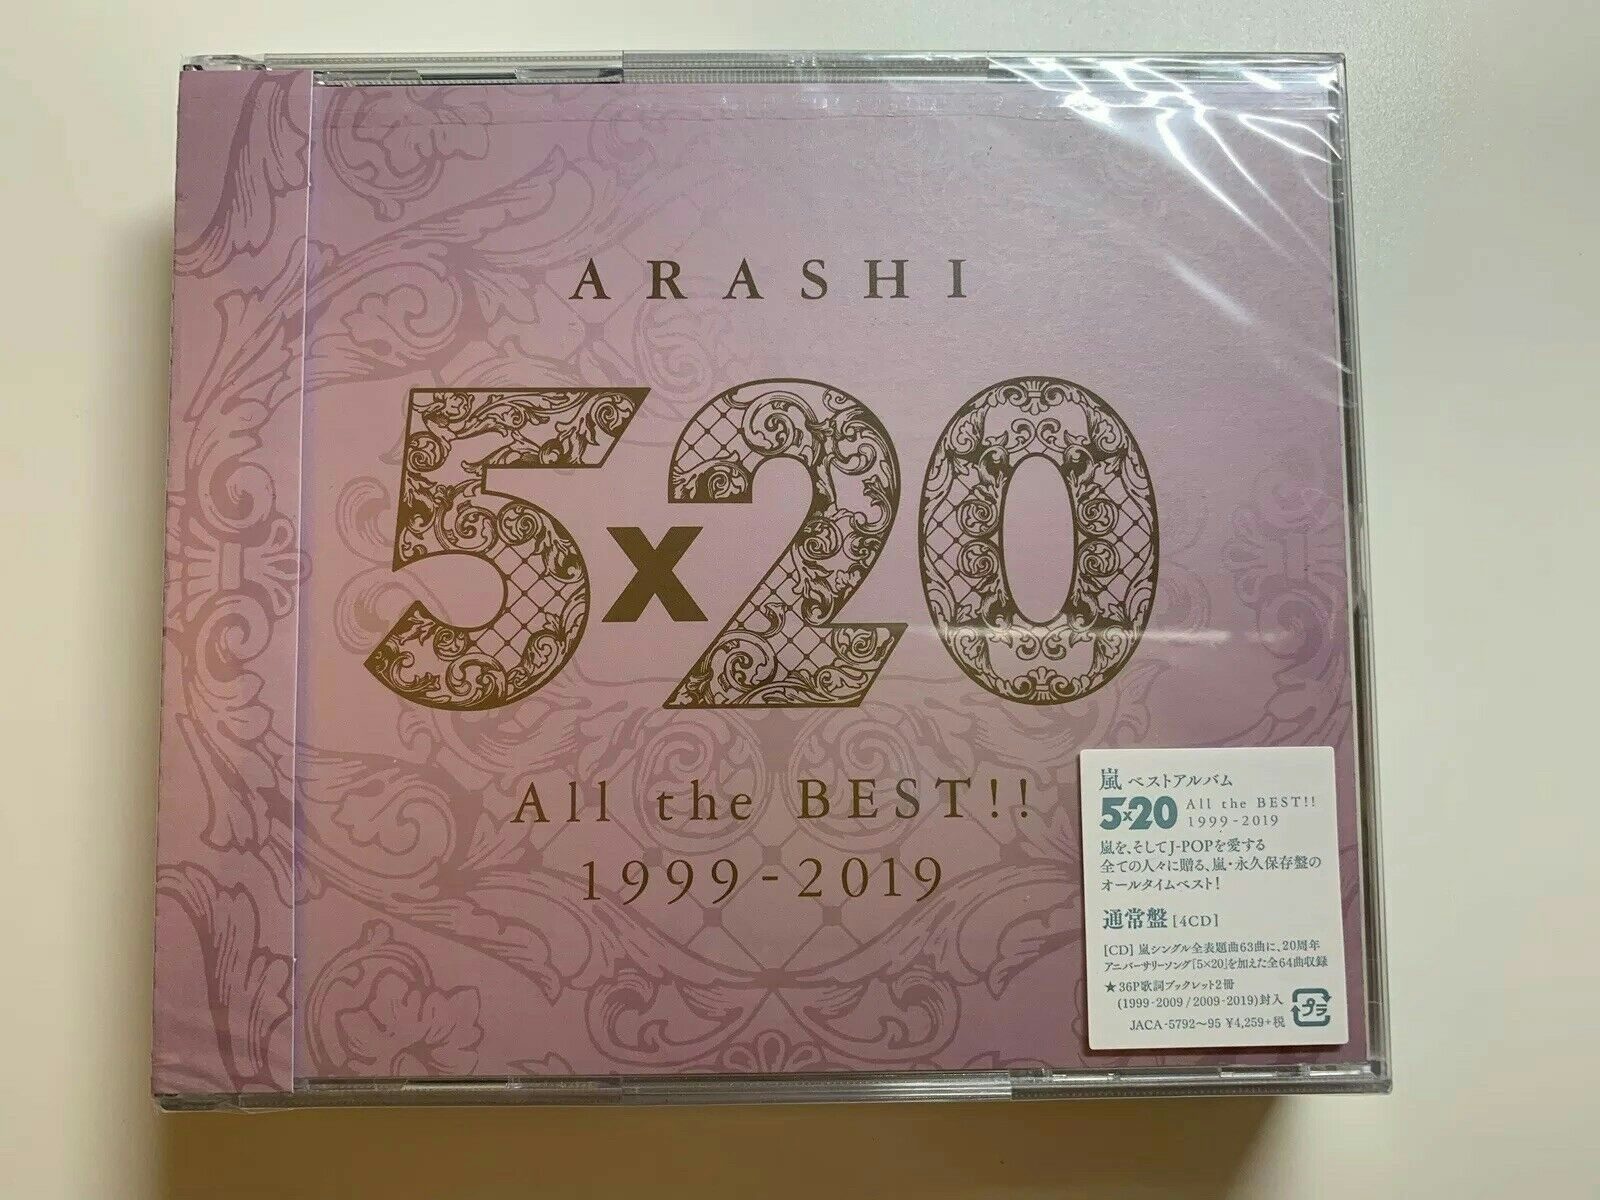 Arashi 5X20 ALL THE BEST 1999-2019 CD